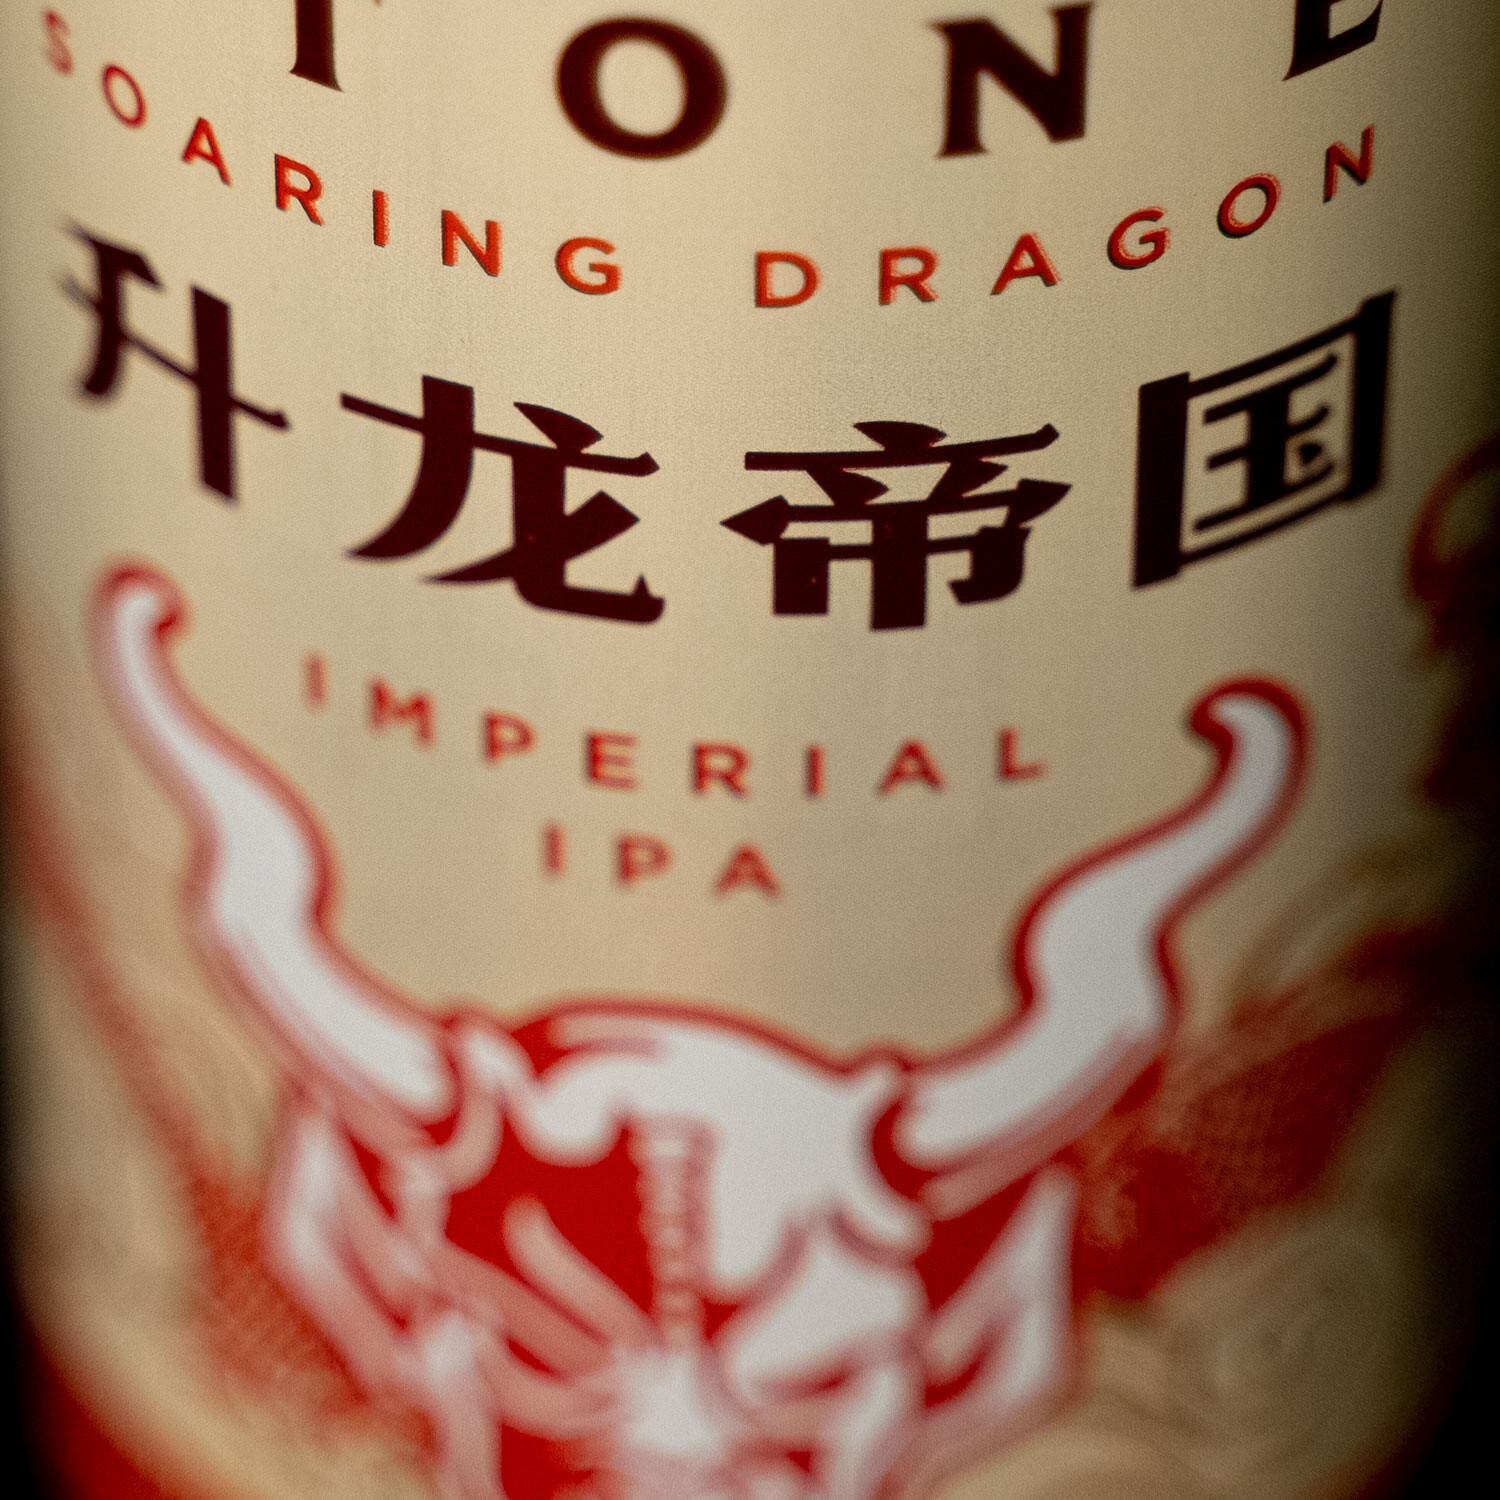 Stone Soaring Dragon Imperial IPA close-up